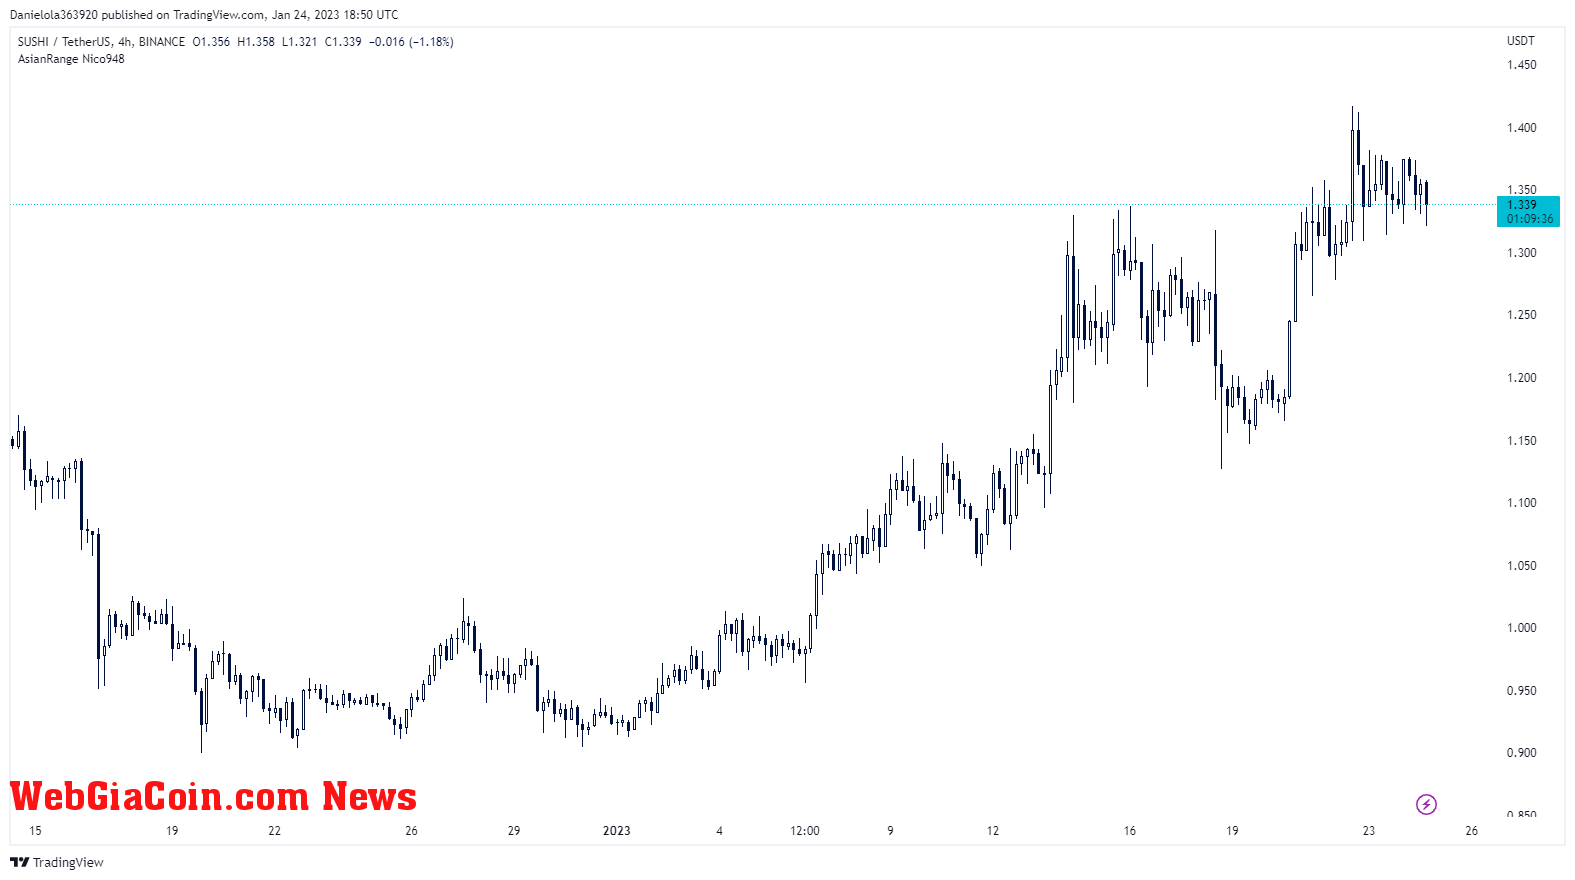 SUSHI price chart on TradingView